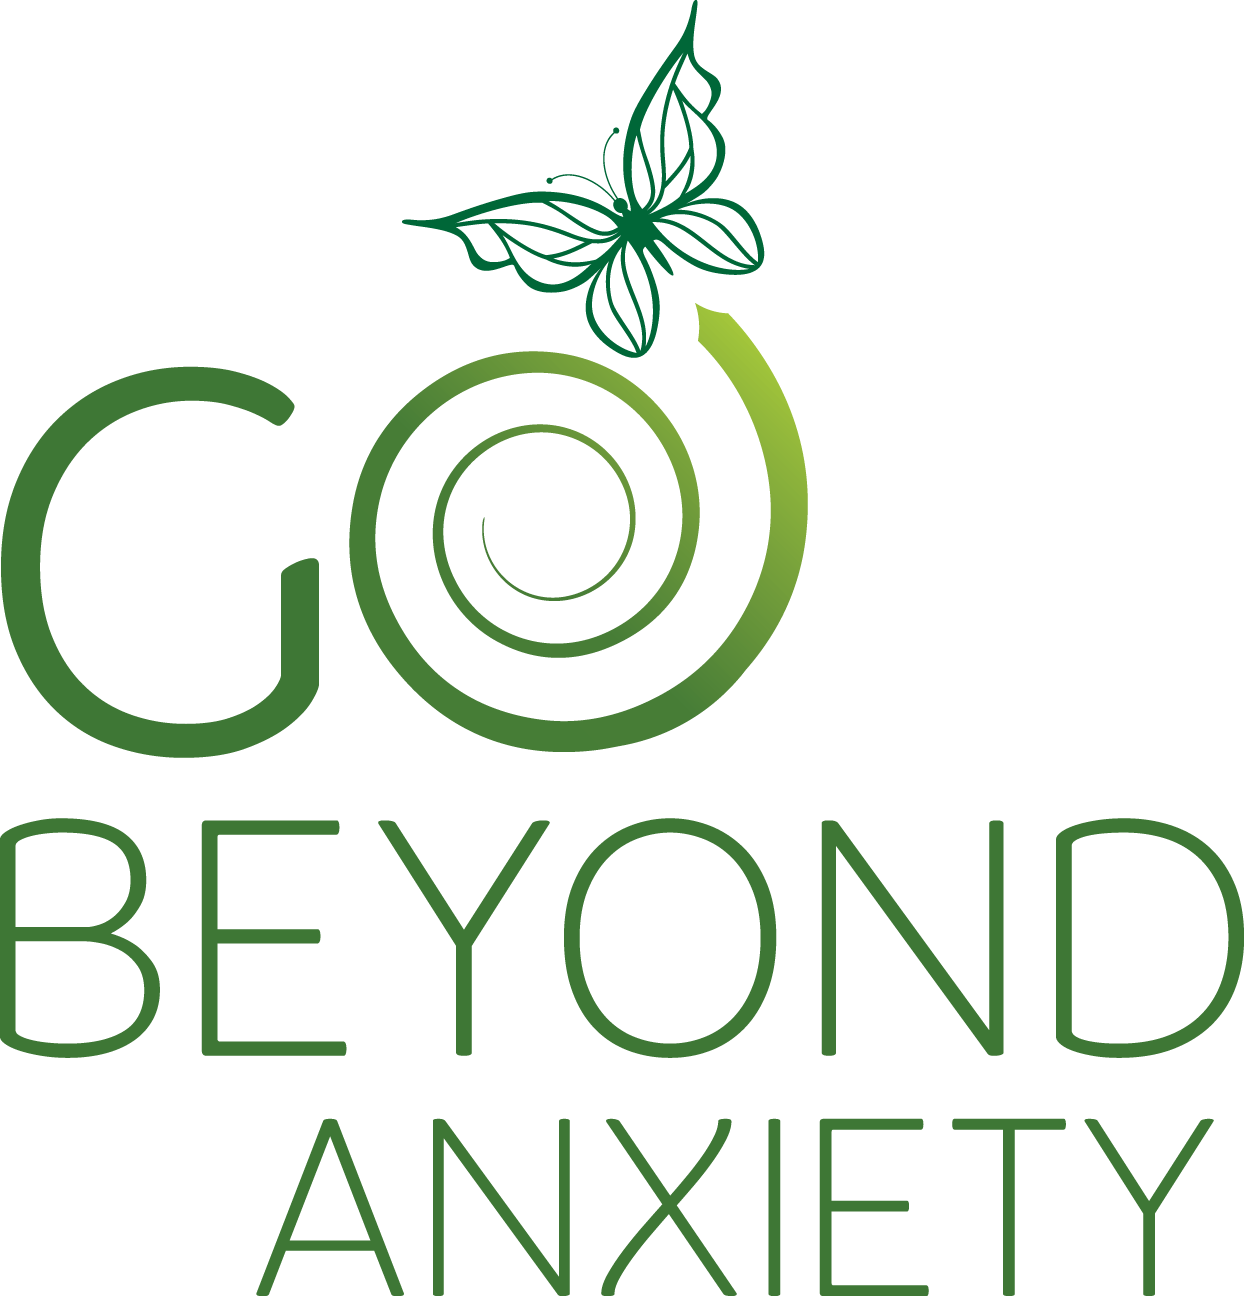 Go Beyond Anxiety logo